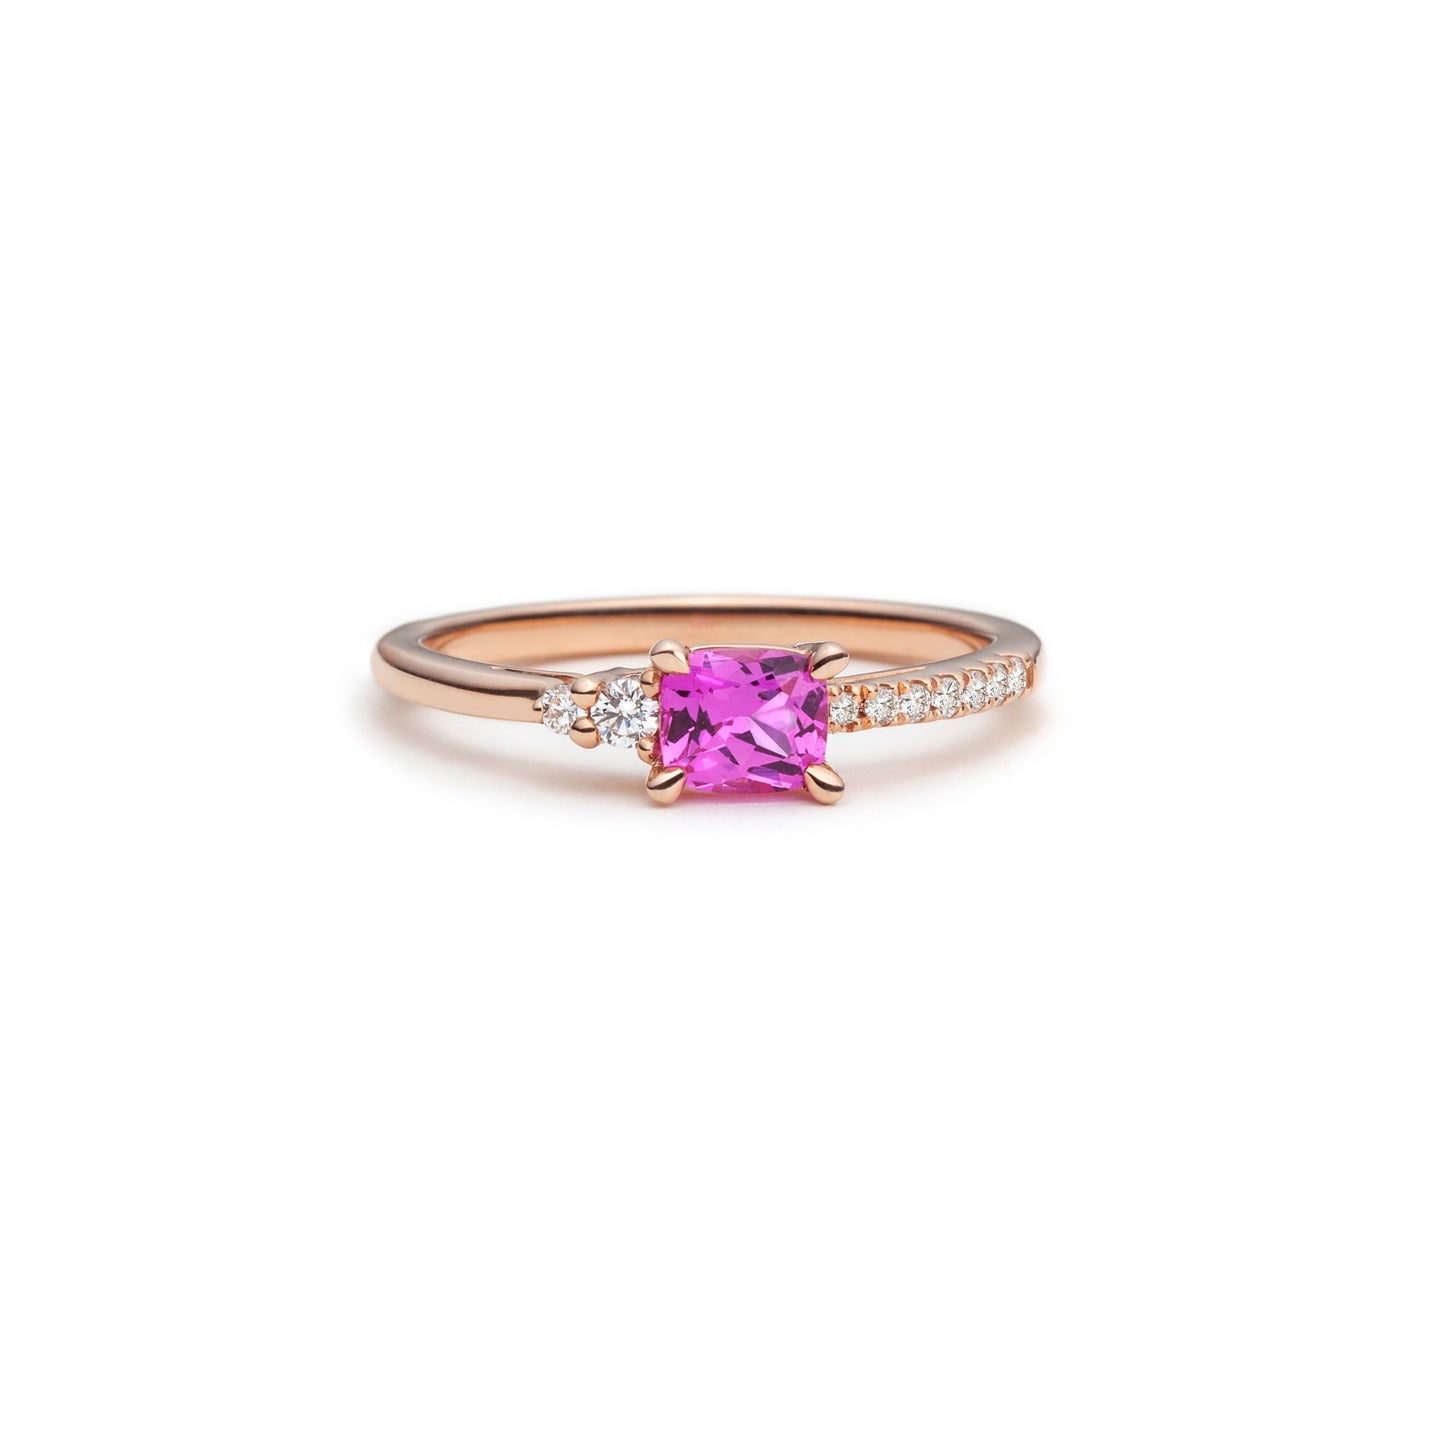 Bright pink sapphire and diamond asymmetric ring